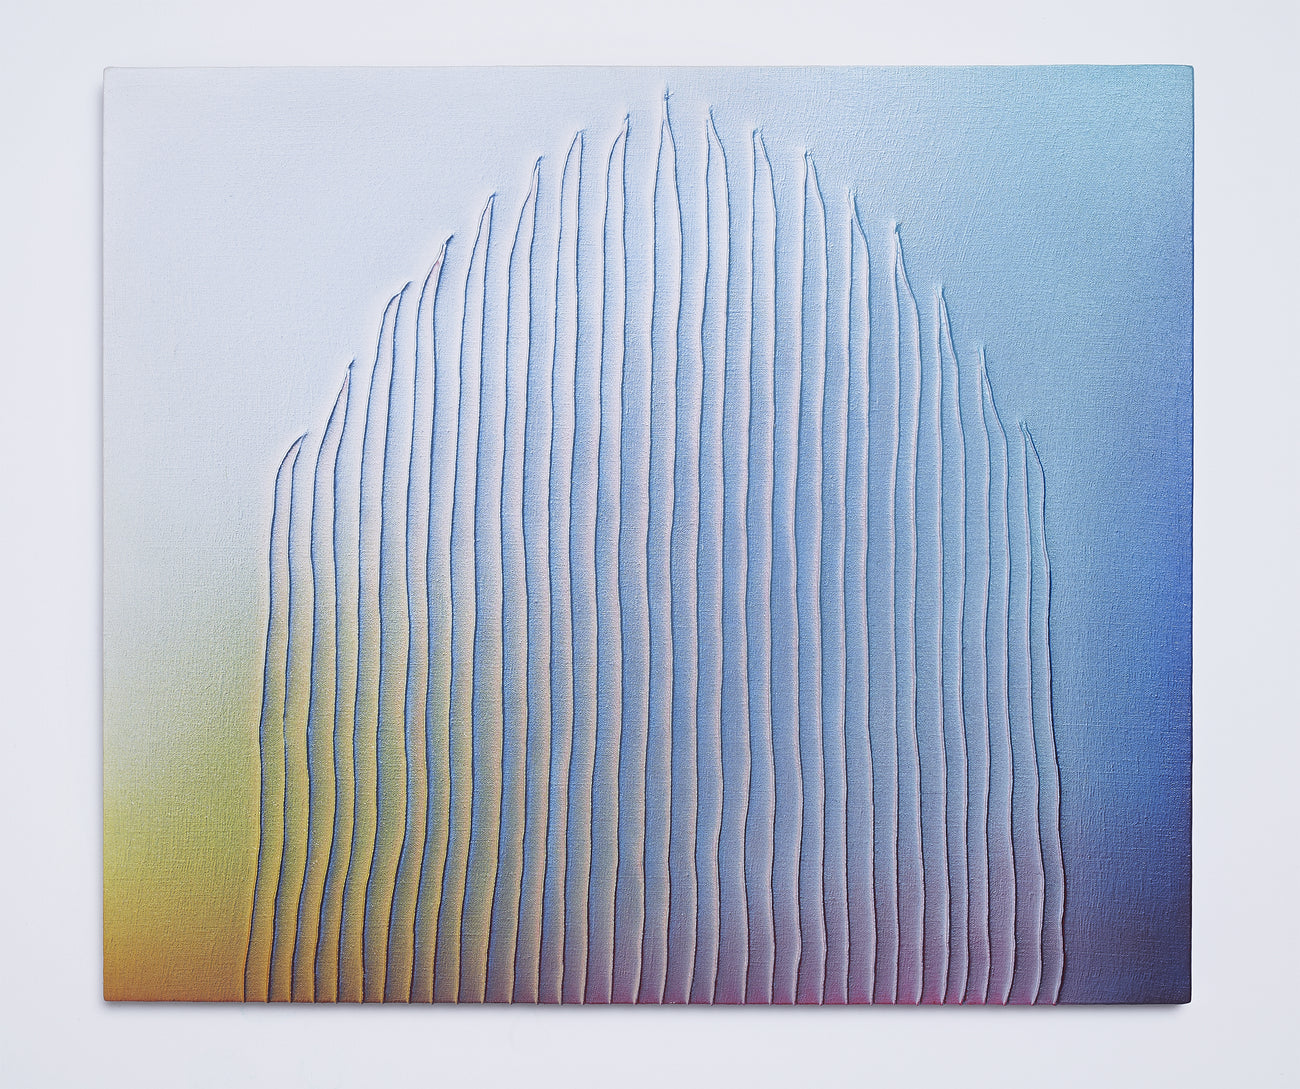 Untitled 170371, TSUYOSHI MAEKAWA, 2000Acrylic on sewn burlap45.5 × 53.0cm